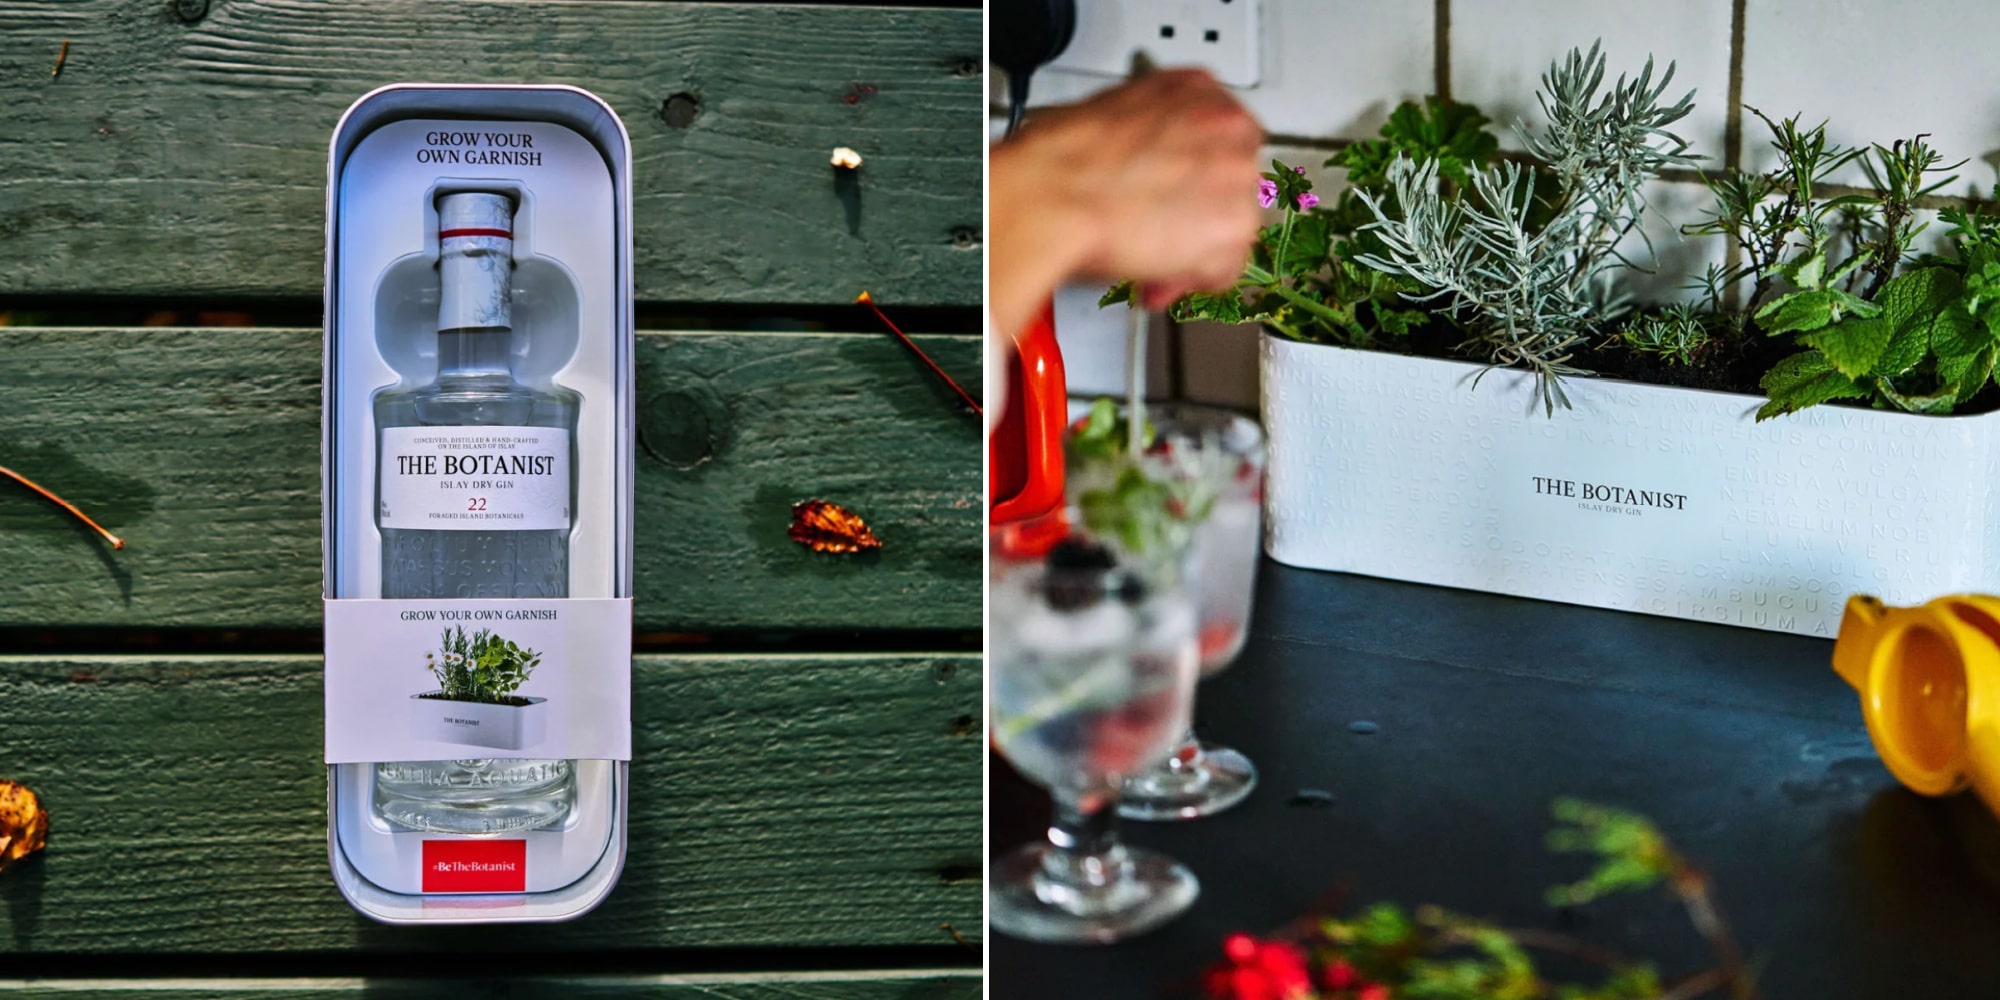 functional liquor boxes double as reusable planter sustainability